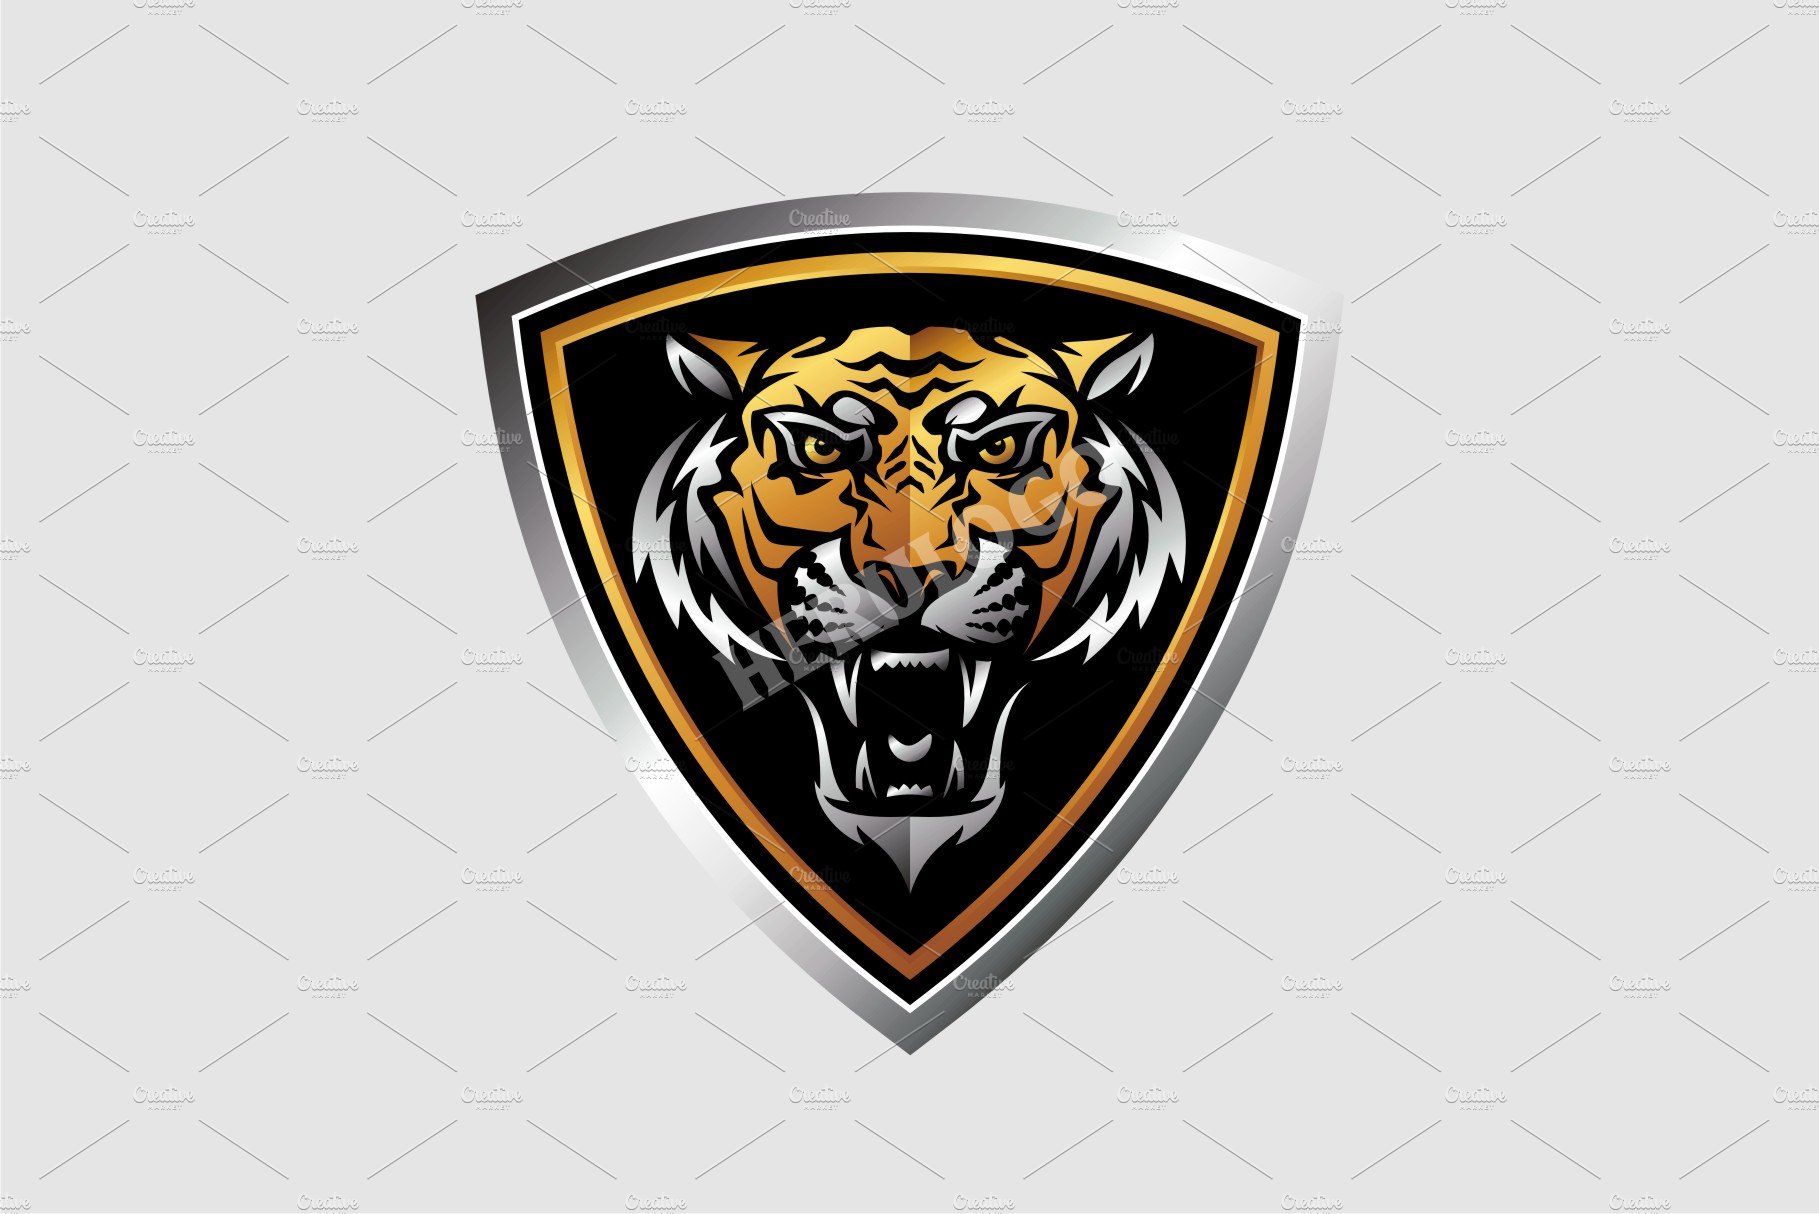 Golden Tiger preview image.